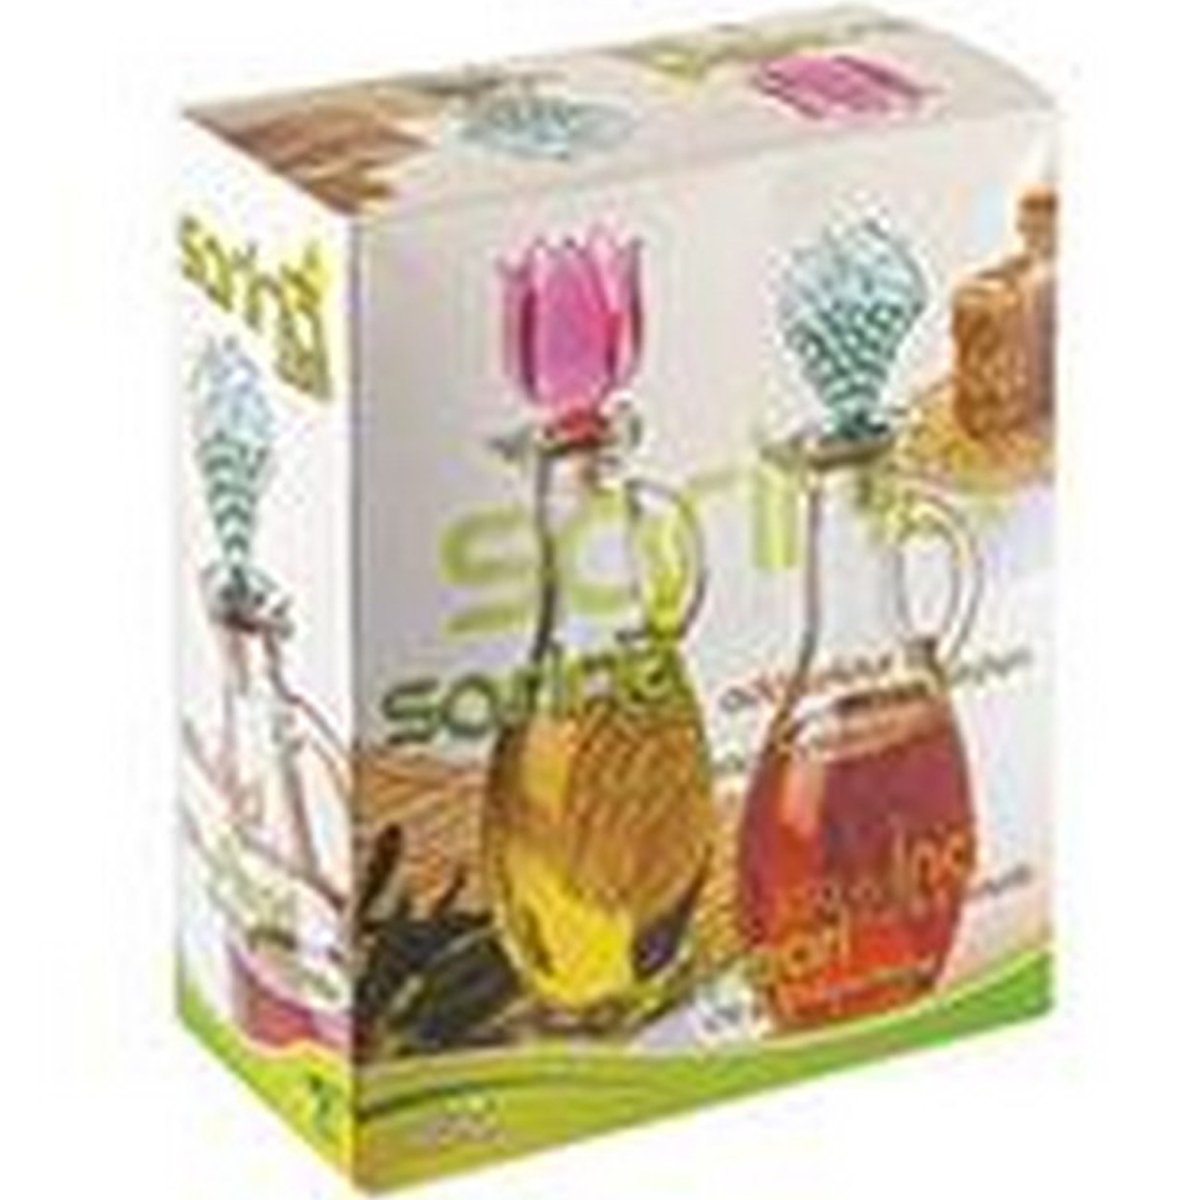 Sarina Glass Oil Bottle 2pcs Set 250ml